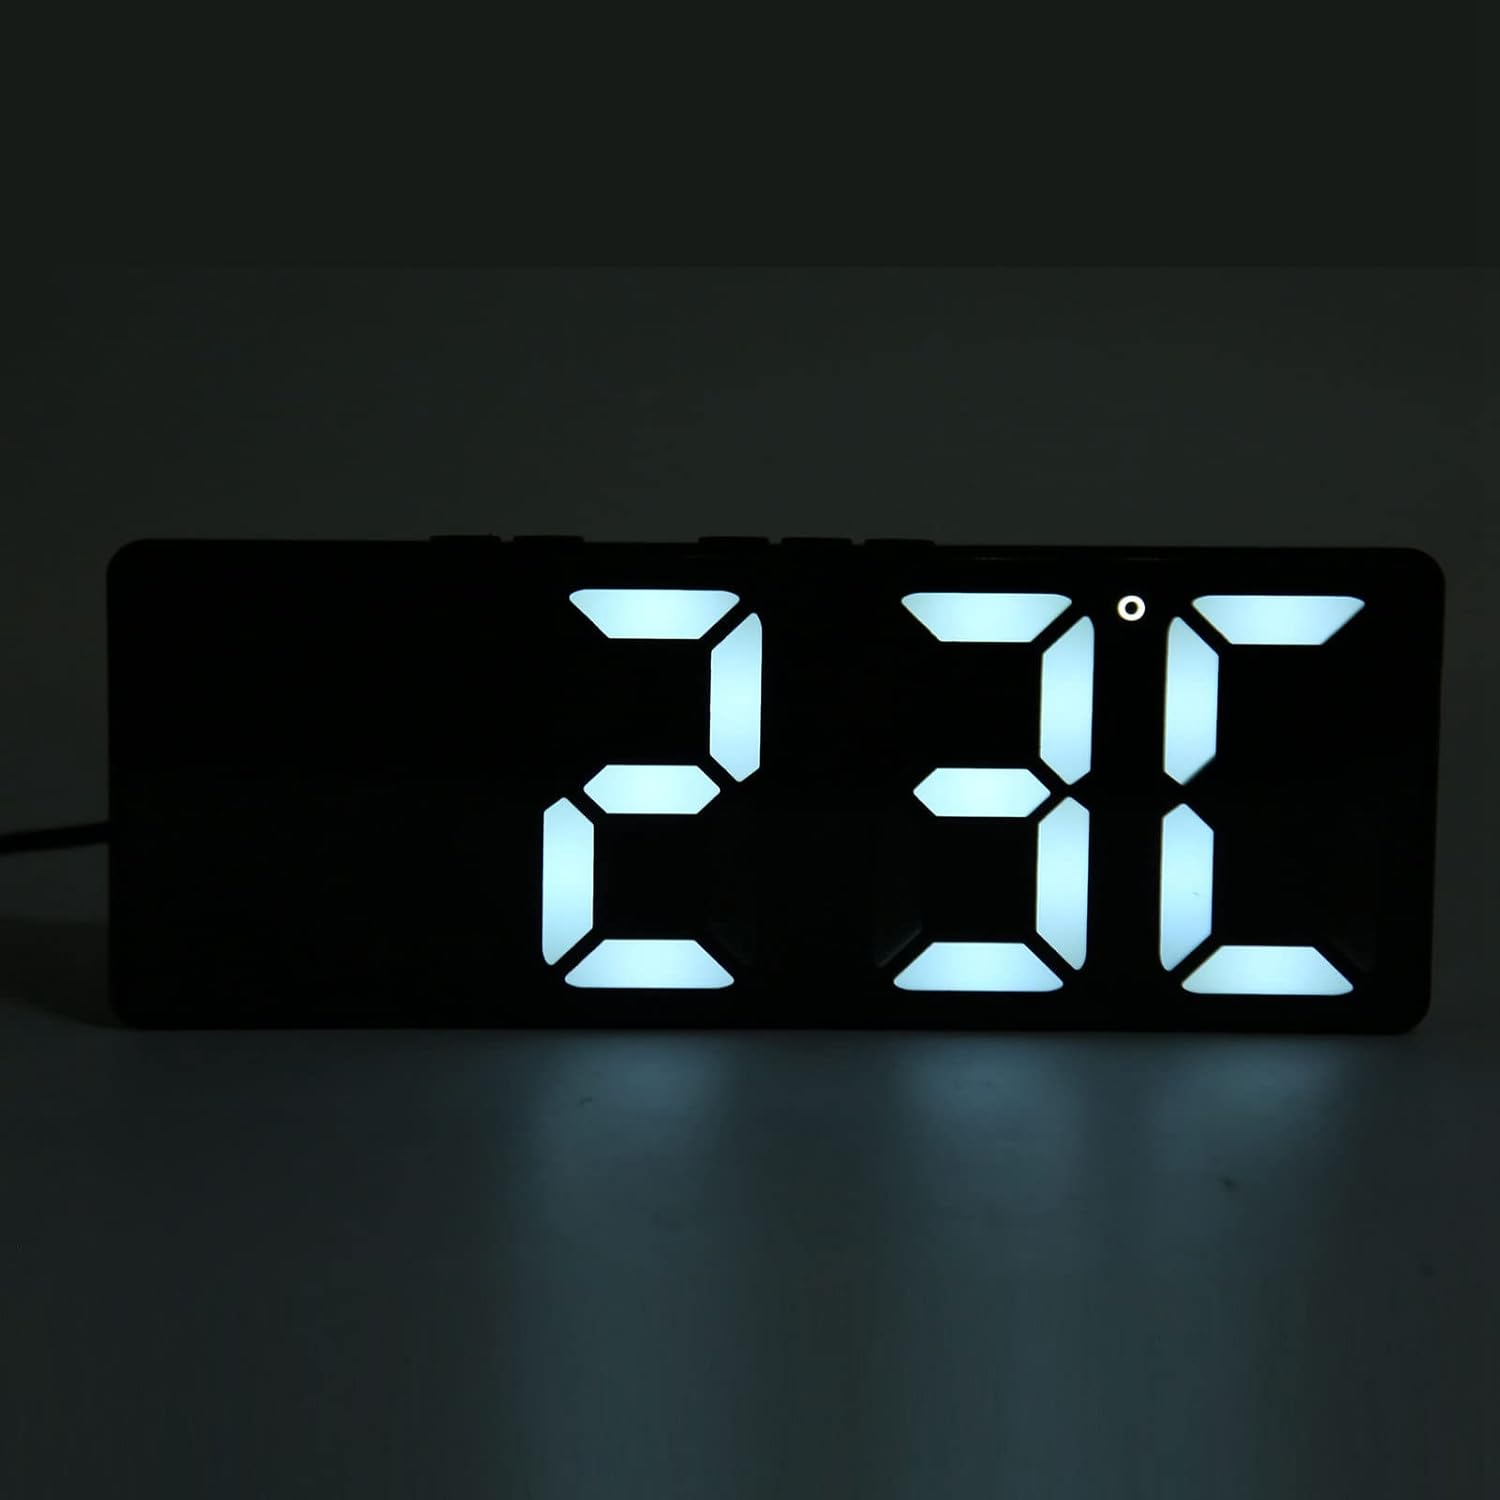 Digital Alarm Clock, 2 Alarms Loud LED Big Display Mirror Clock with Temperature Display, USB Electronic Desk Snooze Clock for Bedroom Bedside